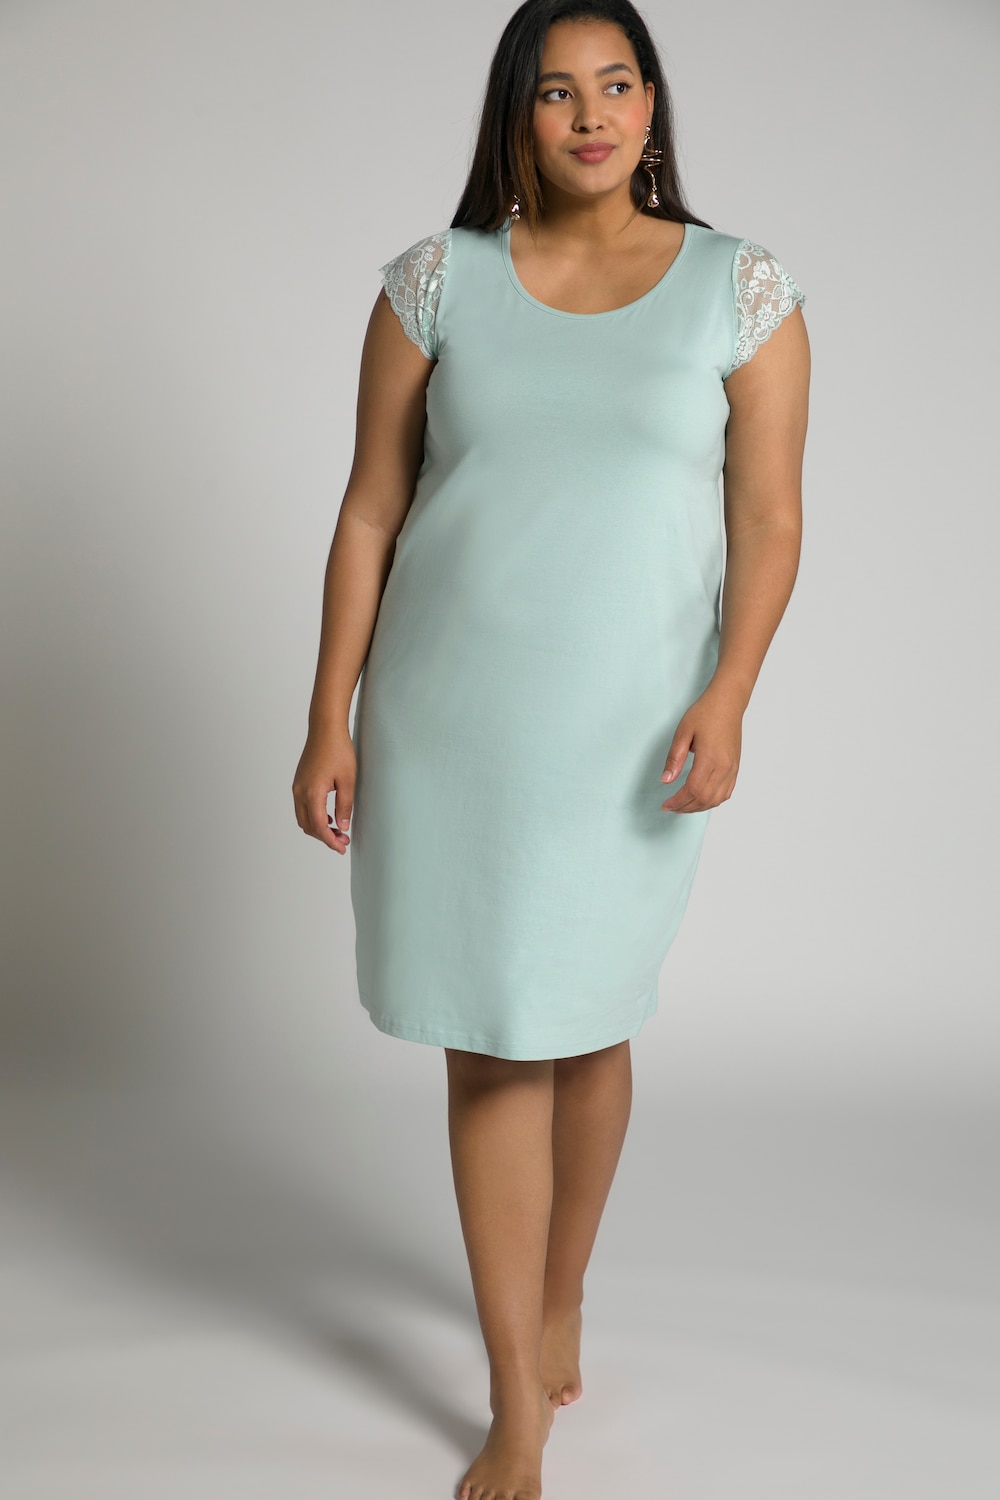 Plus Size Lace Sleeve Stretch Cotton Round Neck Sleep Tee, Woman, turquoise, size: 16/18, cotton, Ulla Popken